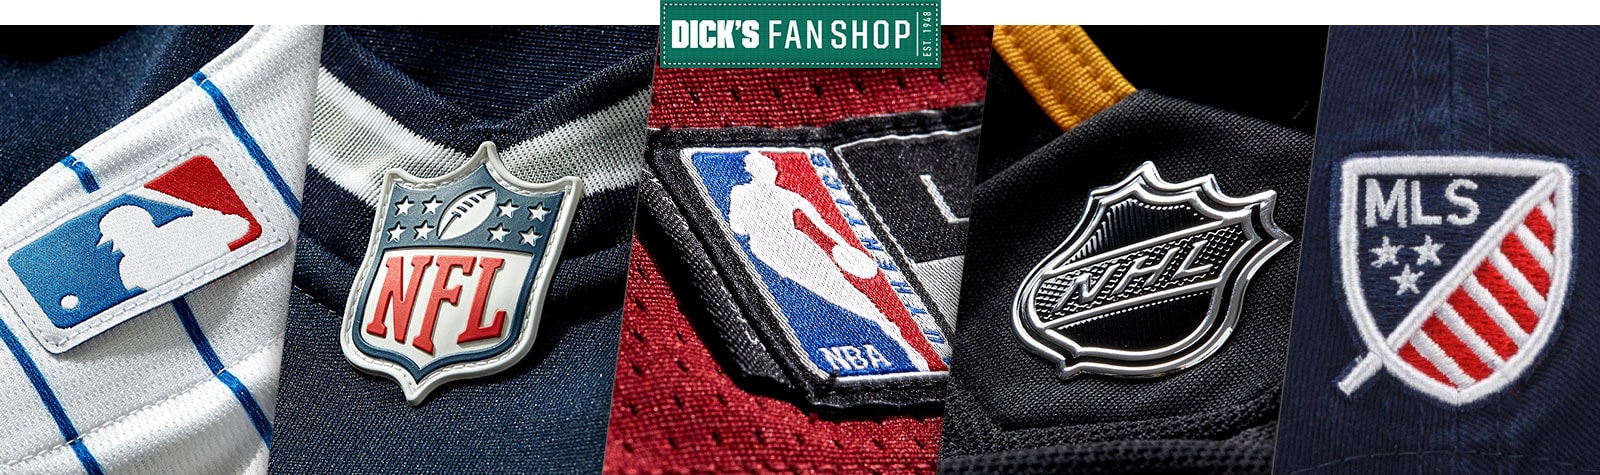 NBA Jerseys, Gear & Apparel  Free Curbside Pickup at DICK'S